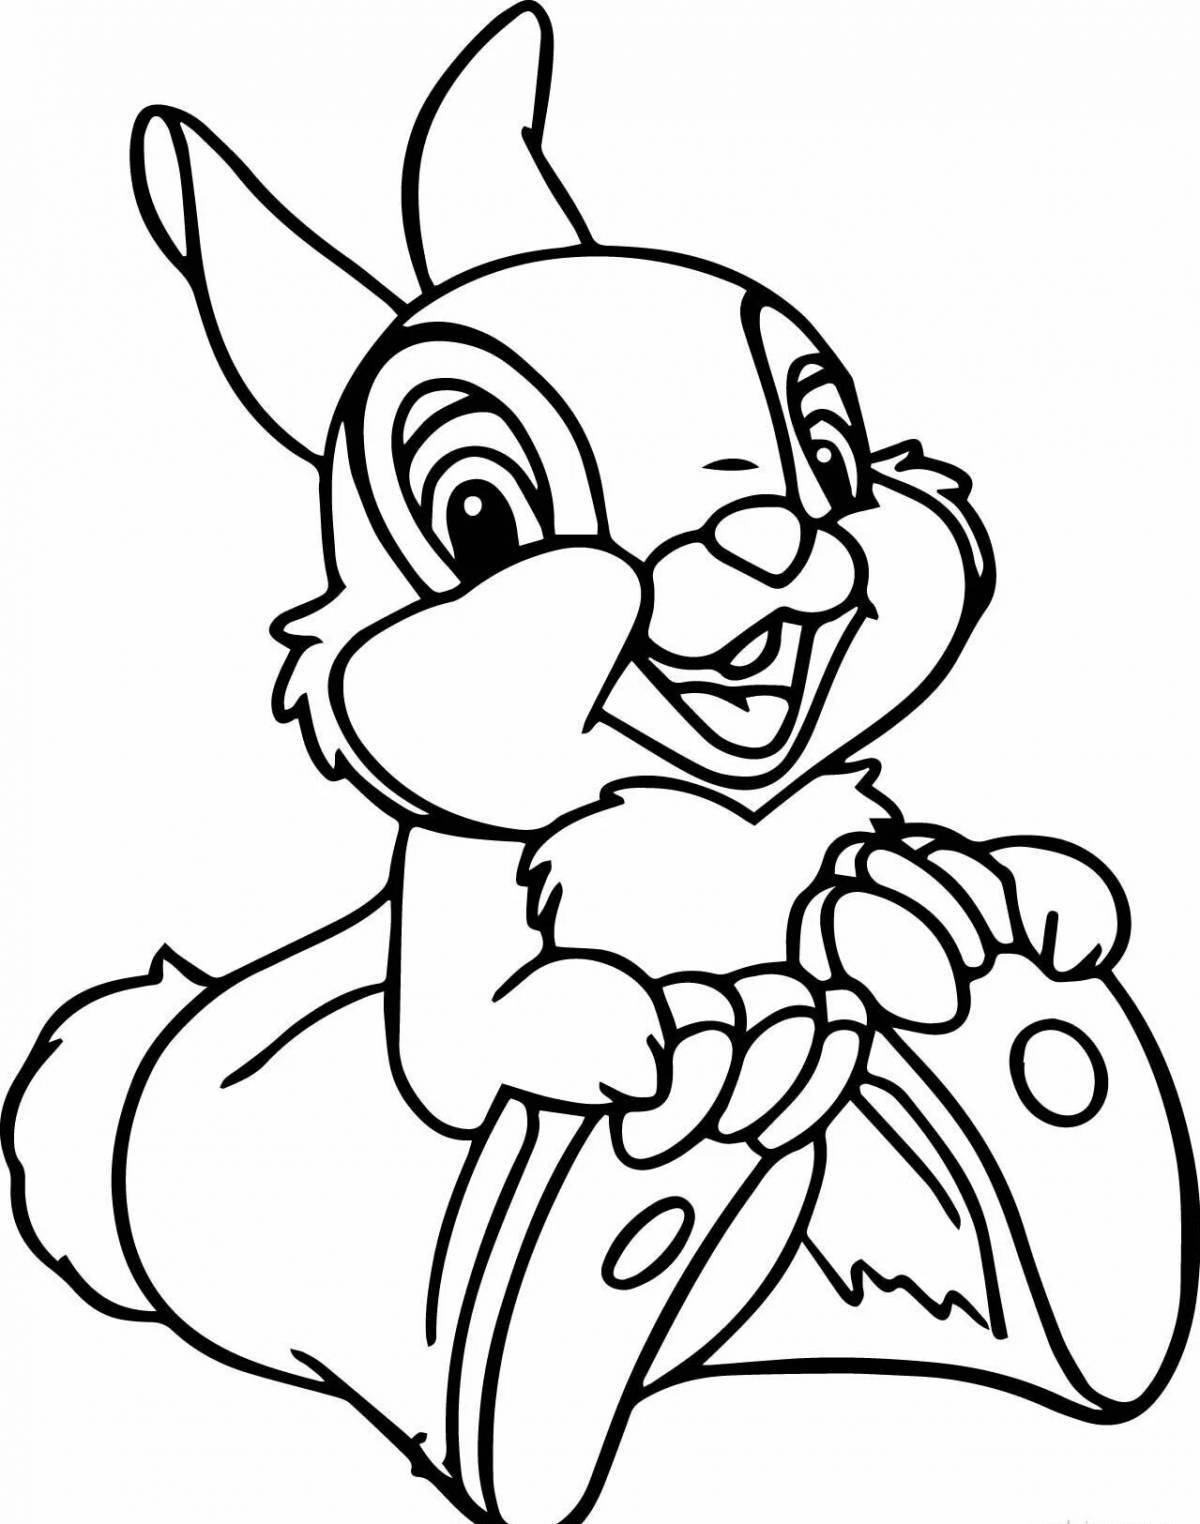 Naughty rabbit cartoon coloring book